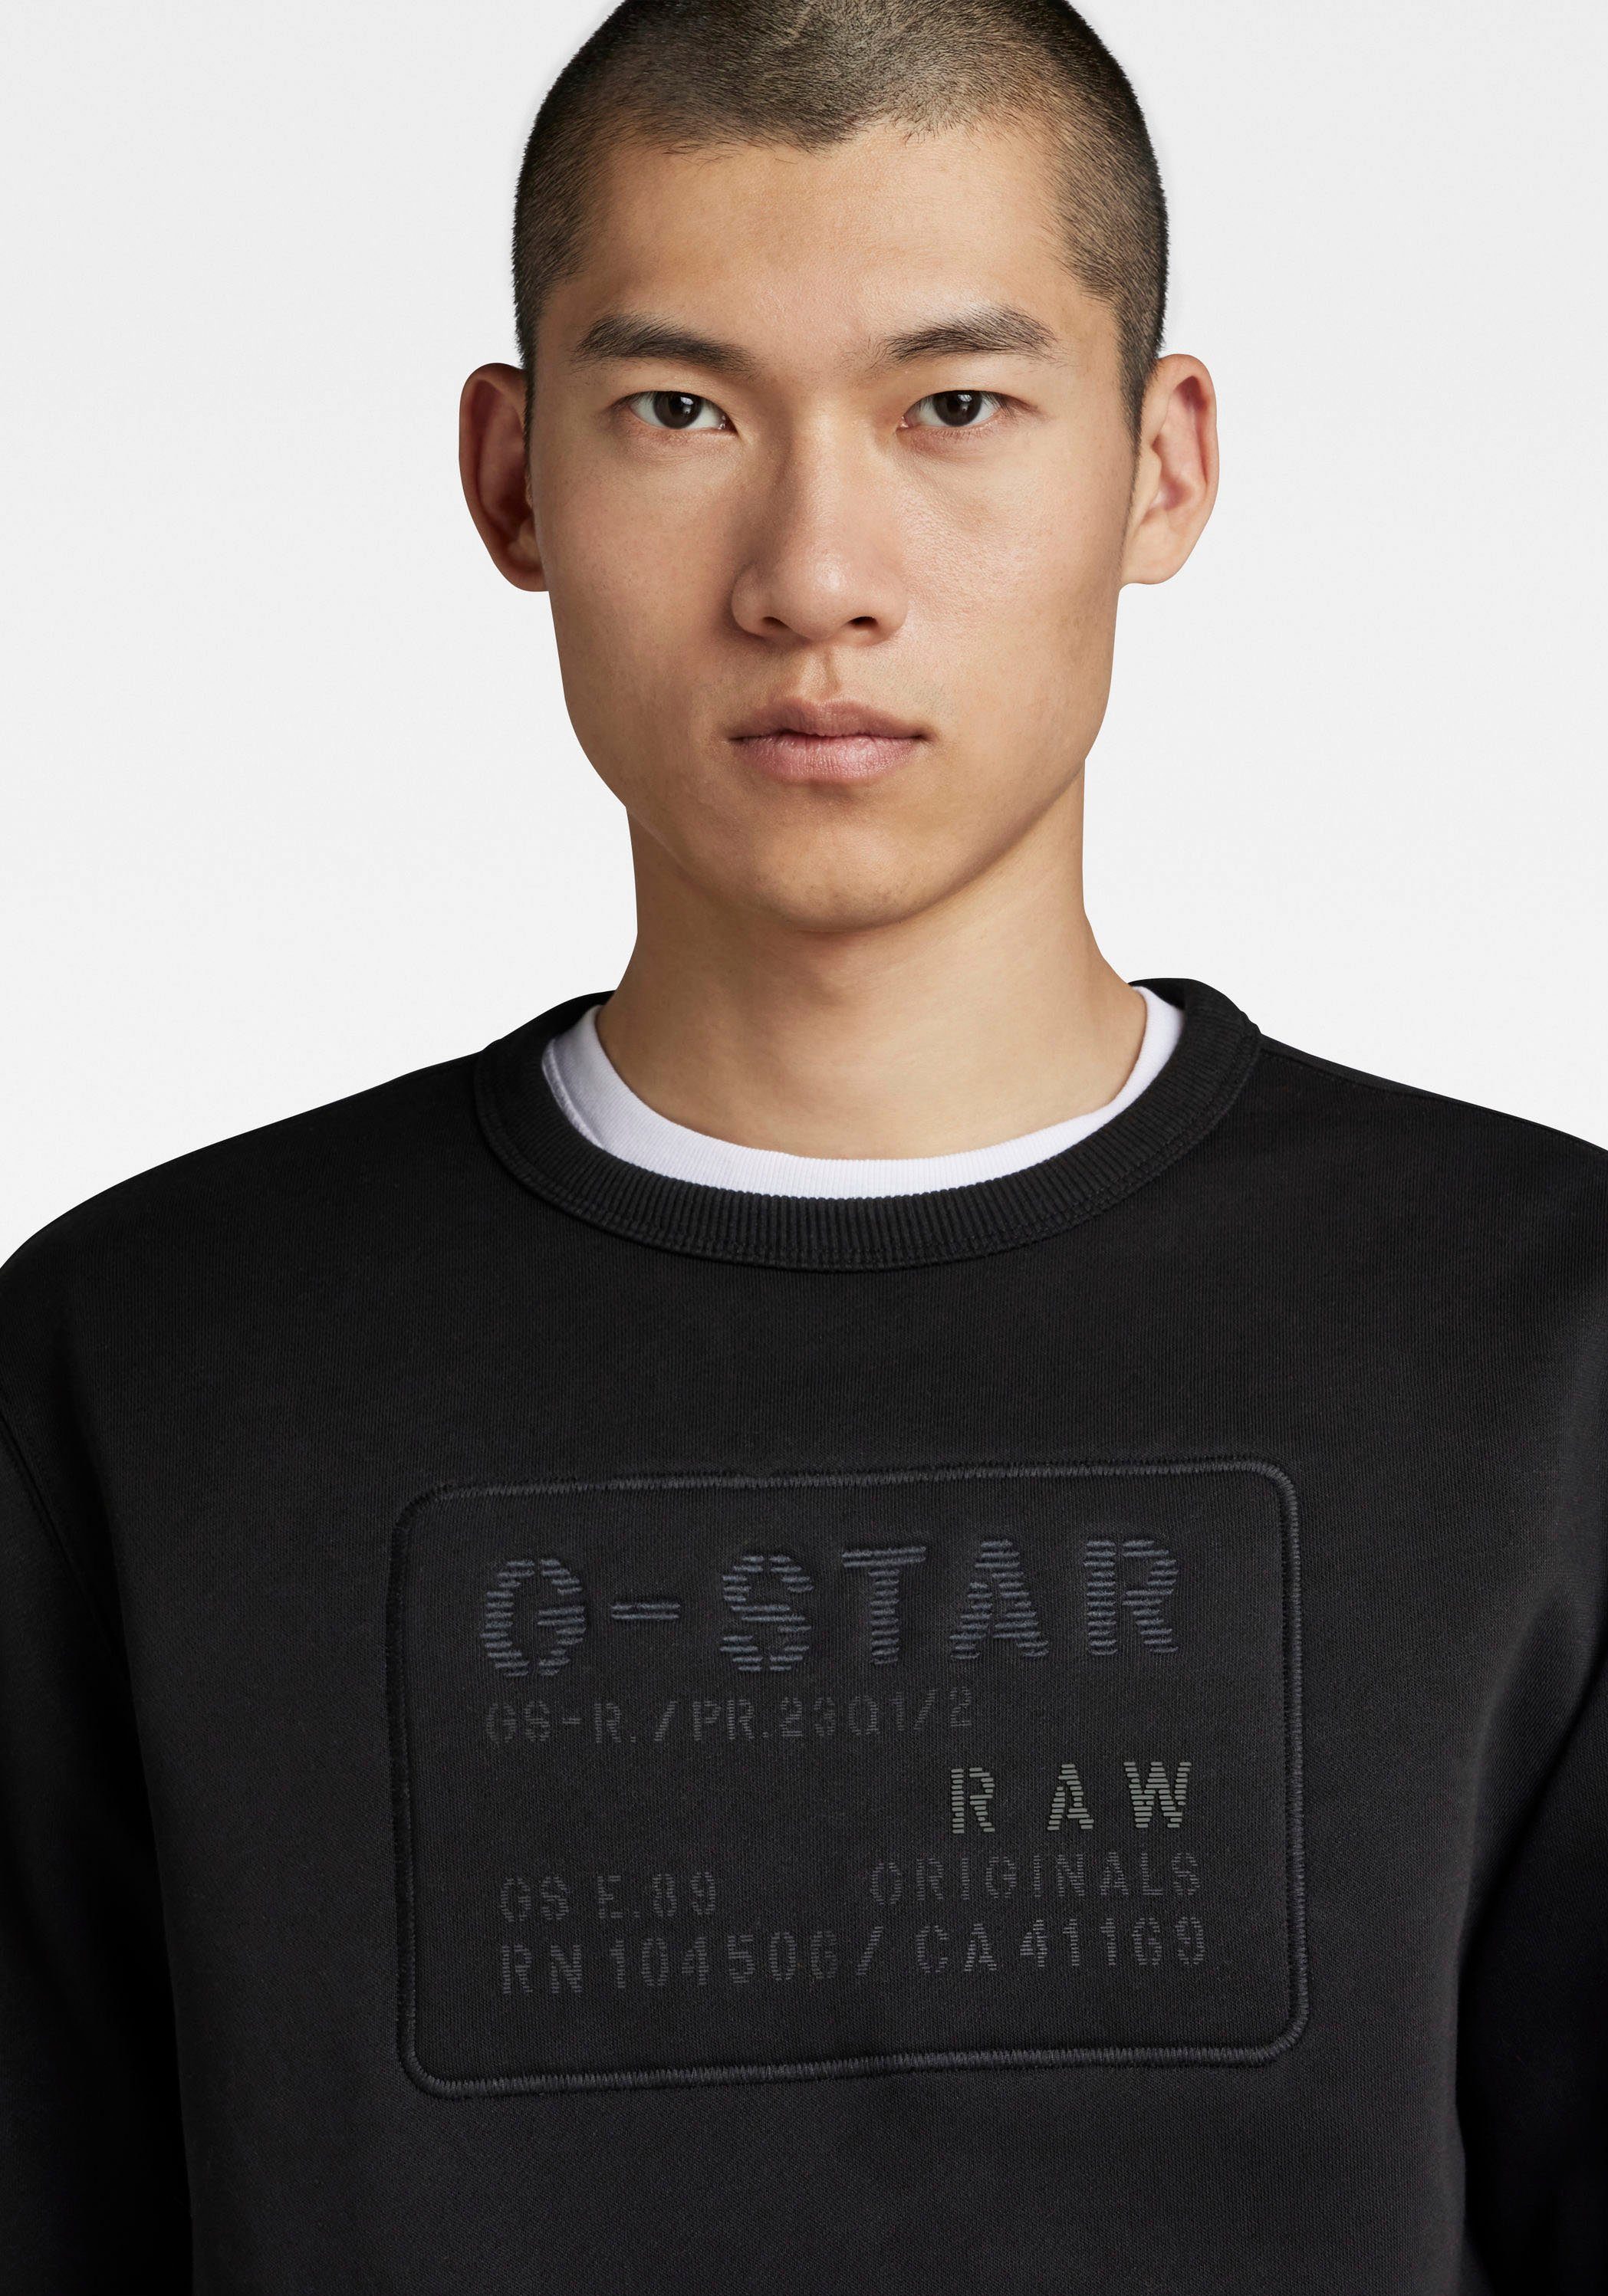 G-Star RAW Originals Sweatshirt Sweatshirt Dark black